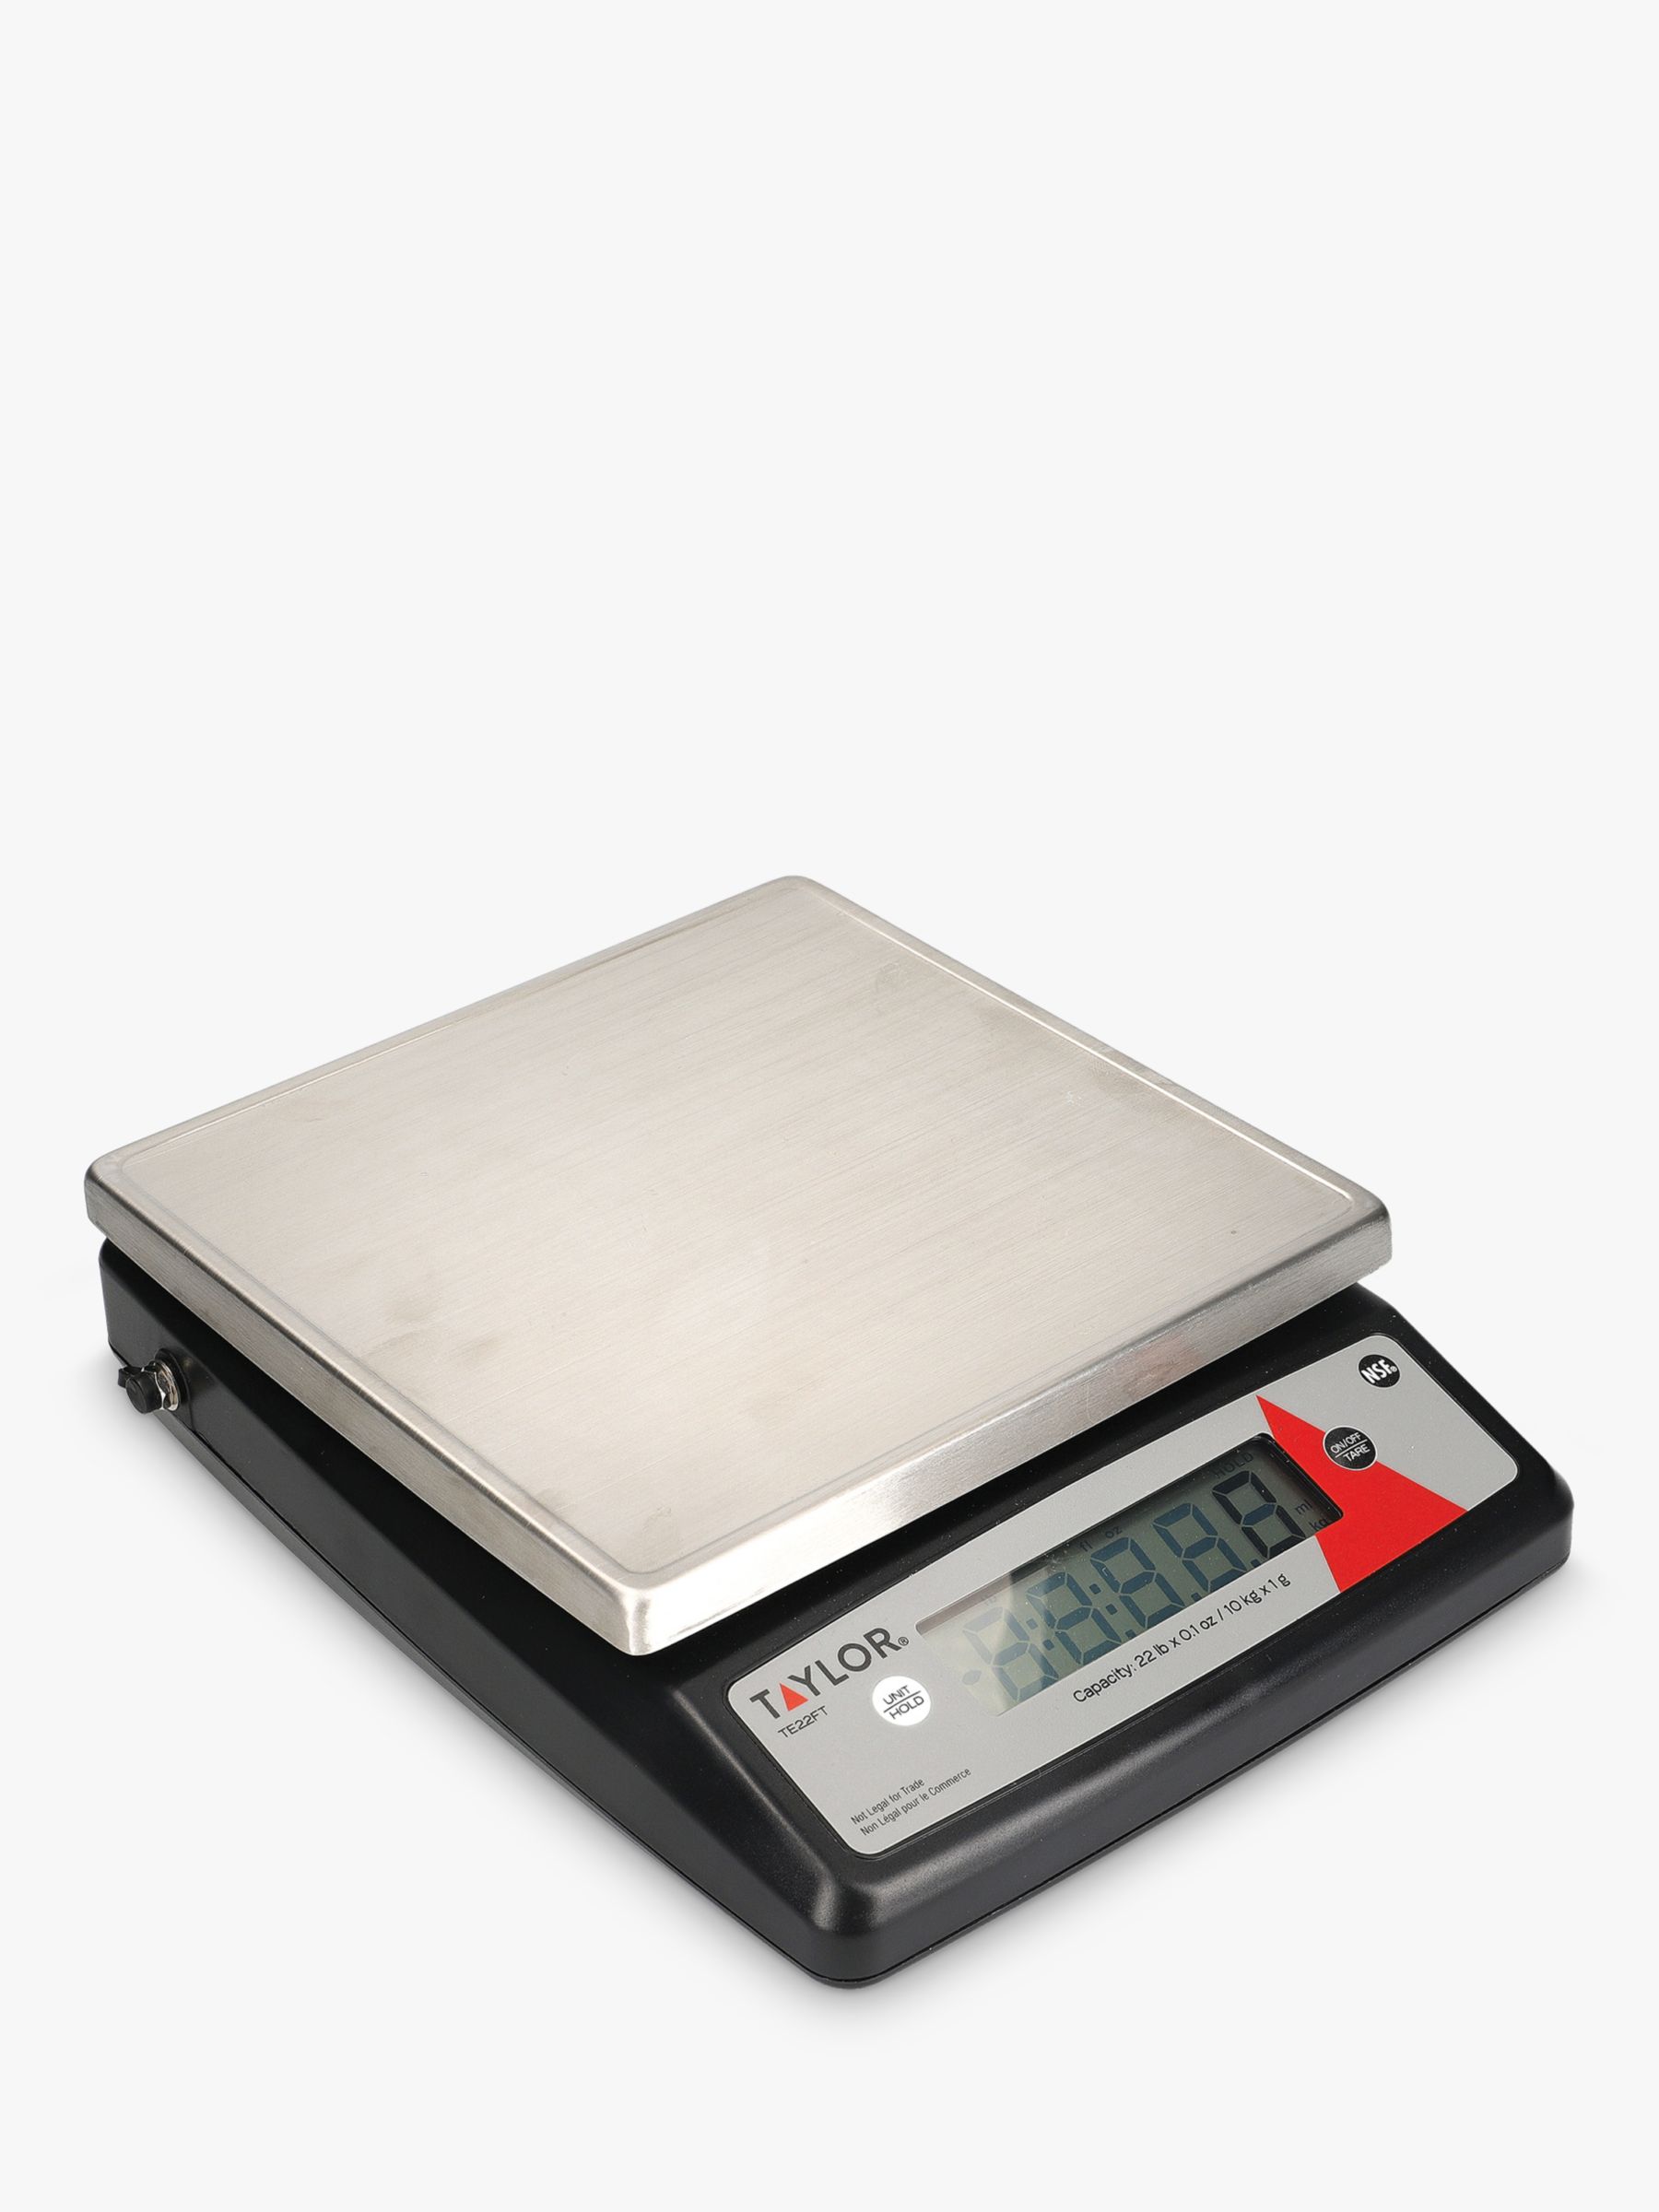 Taylor Kitchen Scale - Silver 8 lb.